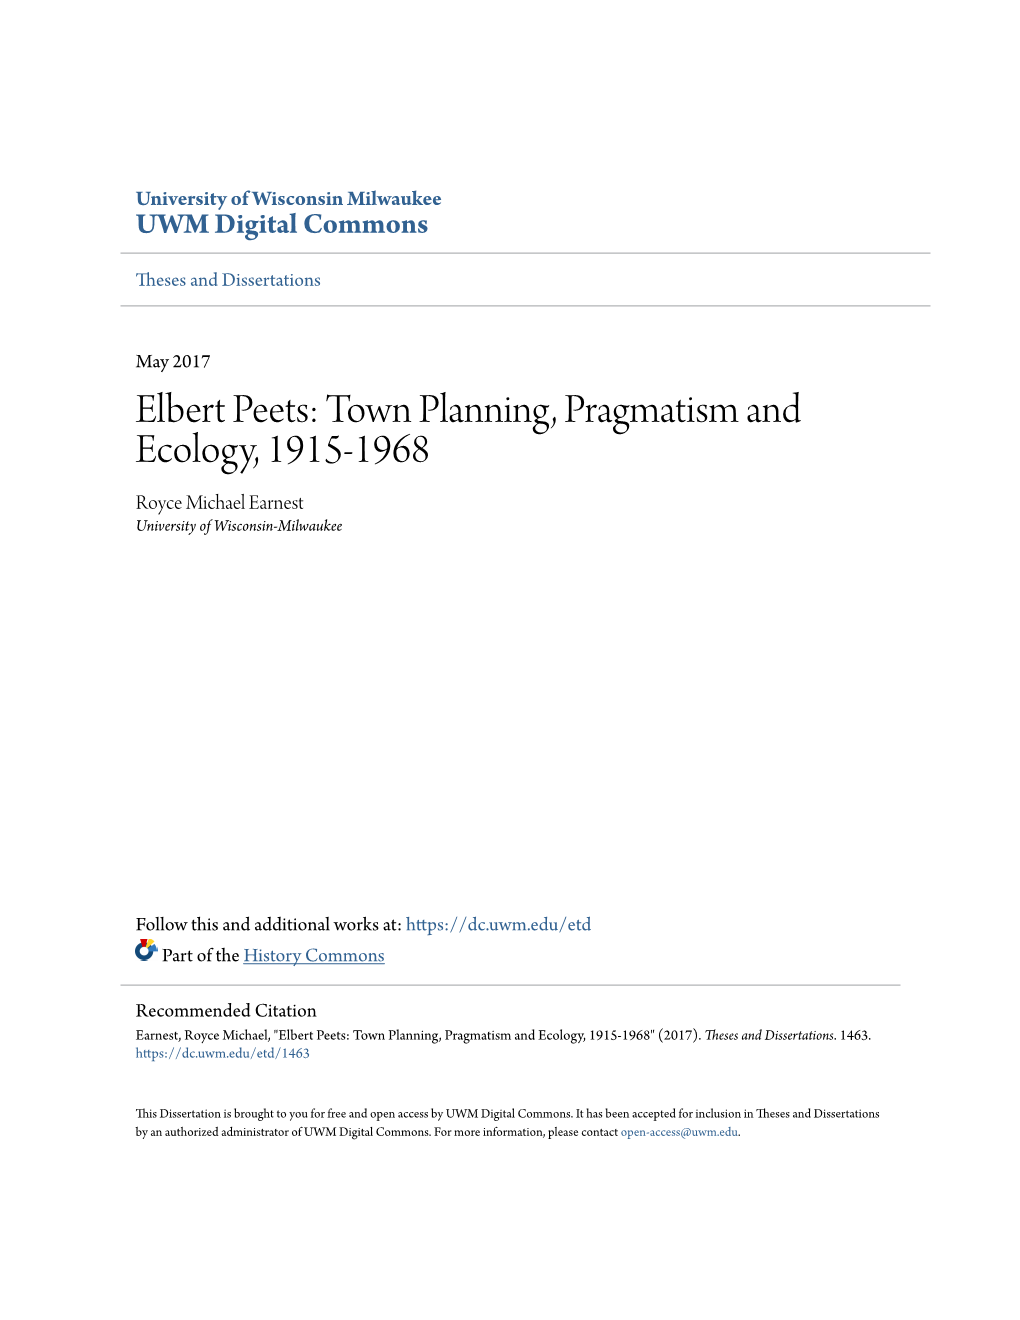 Elbert Peets: Town Planning, Pragmatism and Ecology, 1915-1968 Royce Michael Earnest University of Wisconsin-Milwaukee